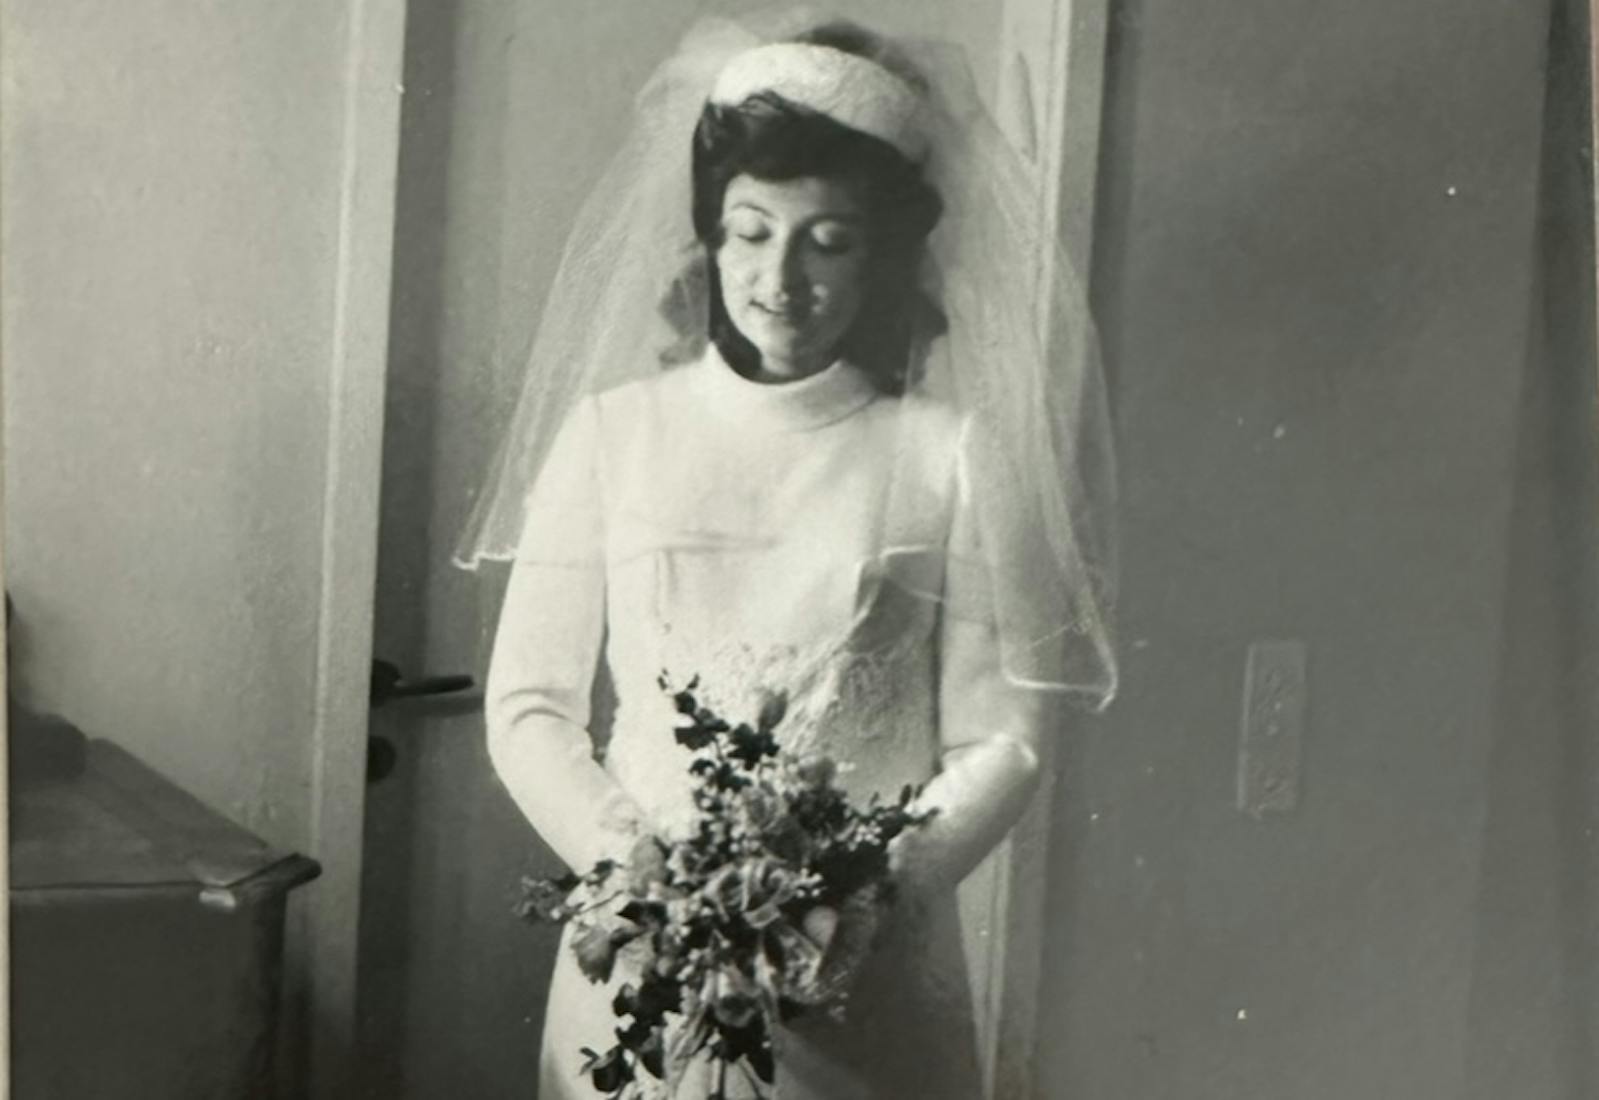 Chaya's grandmother Judith on her wedding day, 1974.